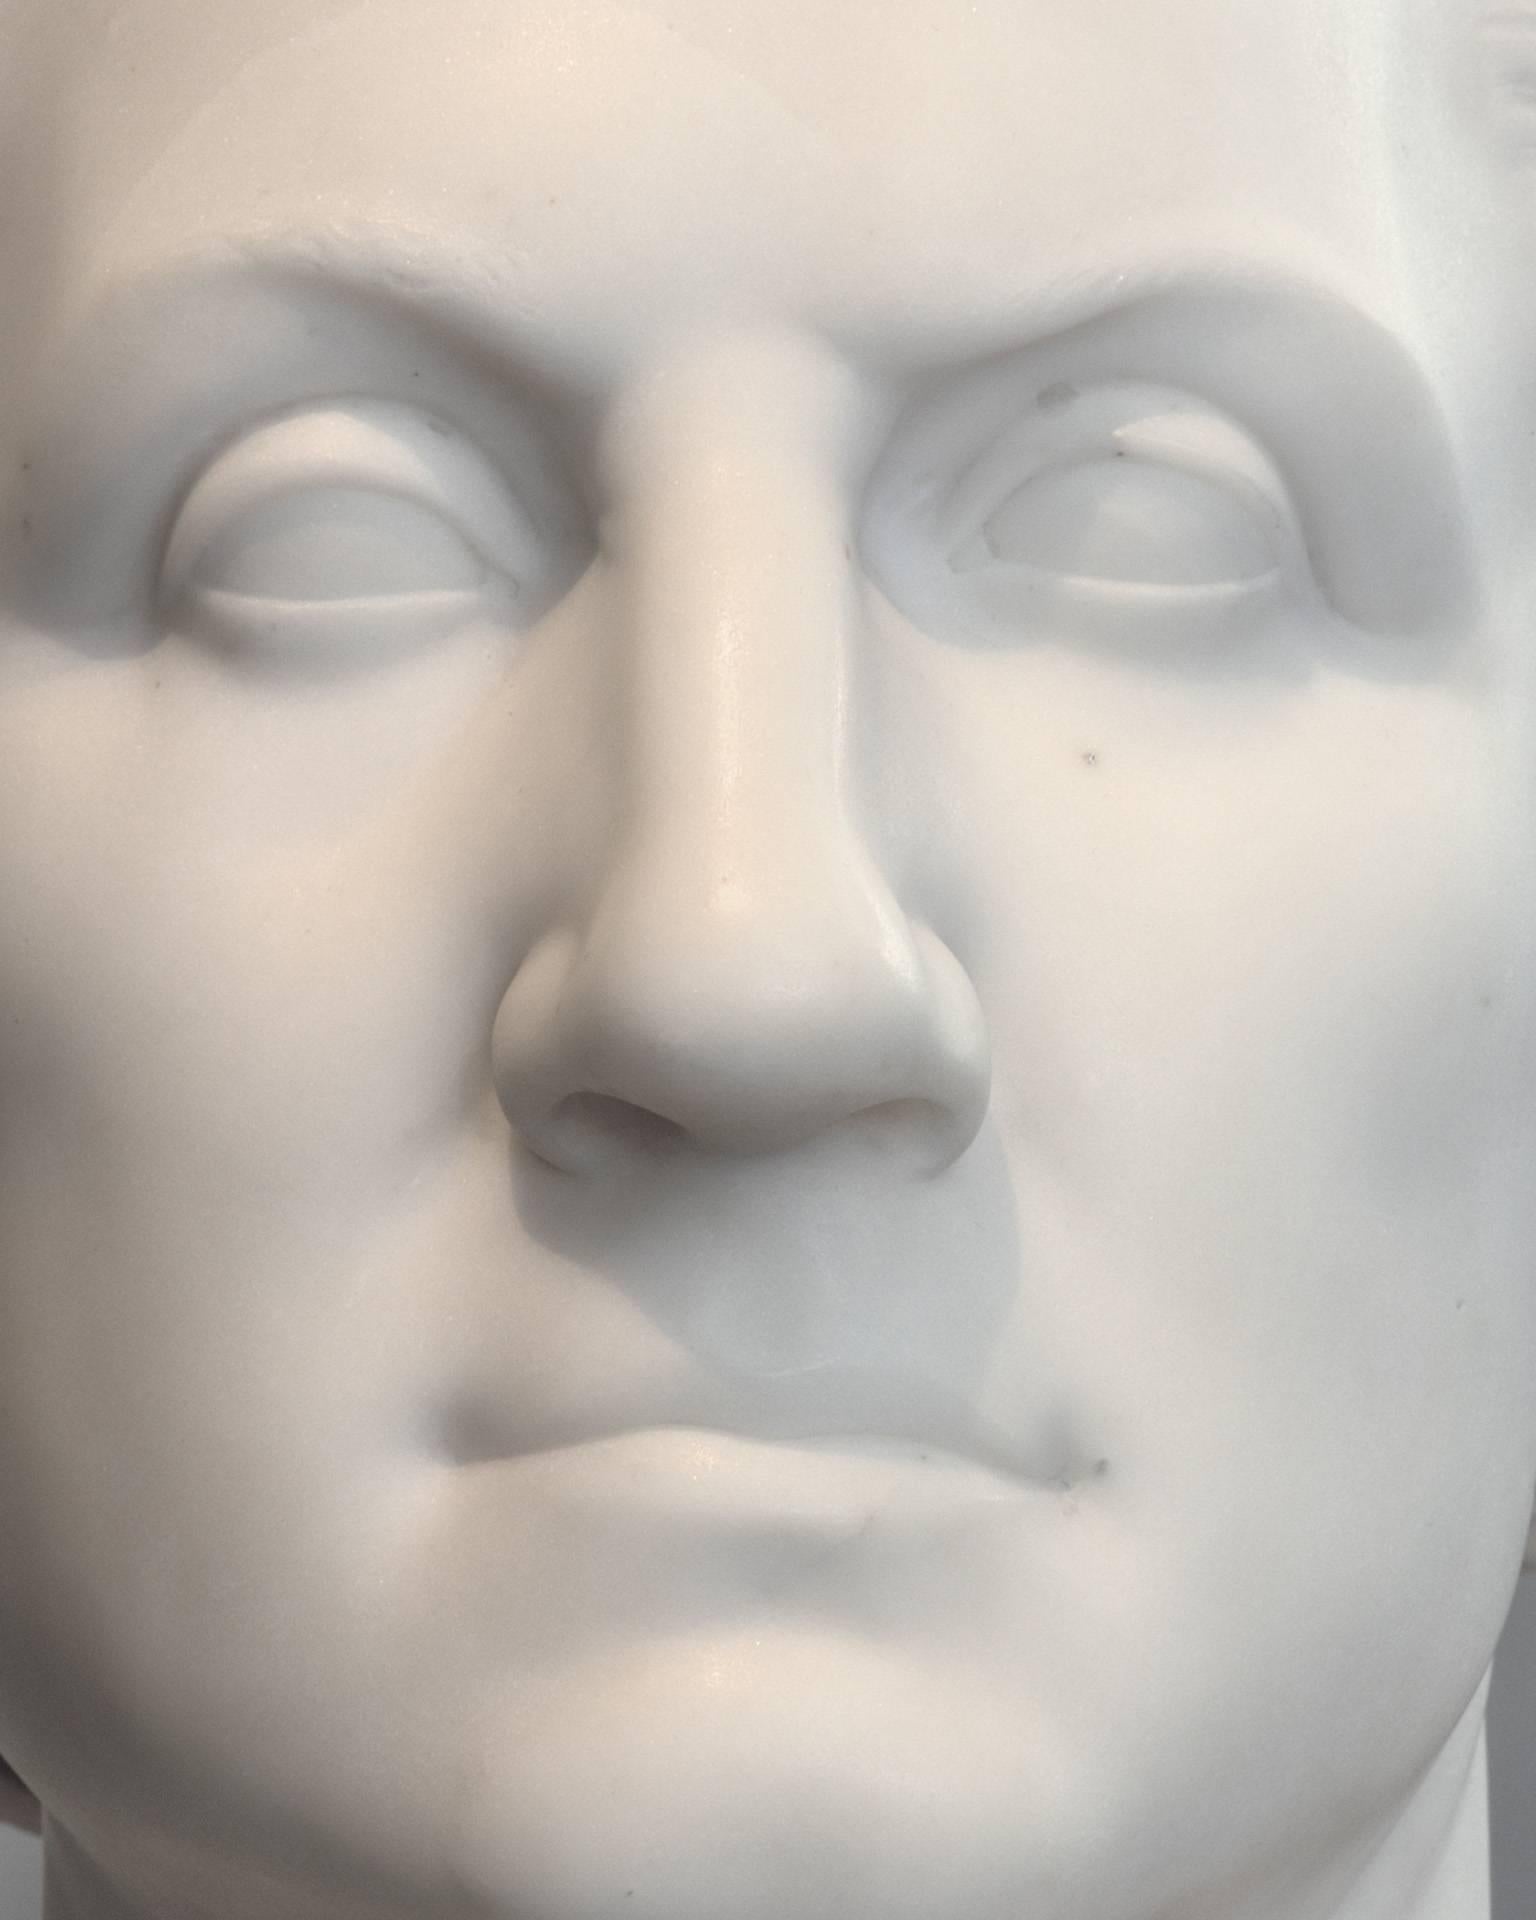 Pierre Sernet Portrait Photograph - F006, American, Marble - Close-Up Photograph of aMarble Sculpture of a Man